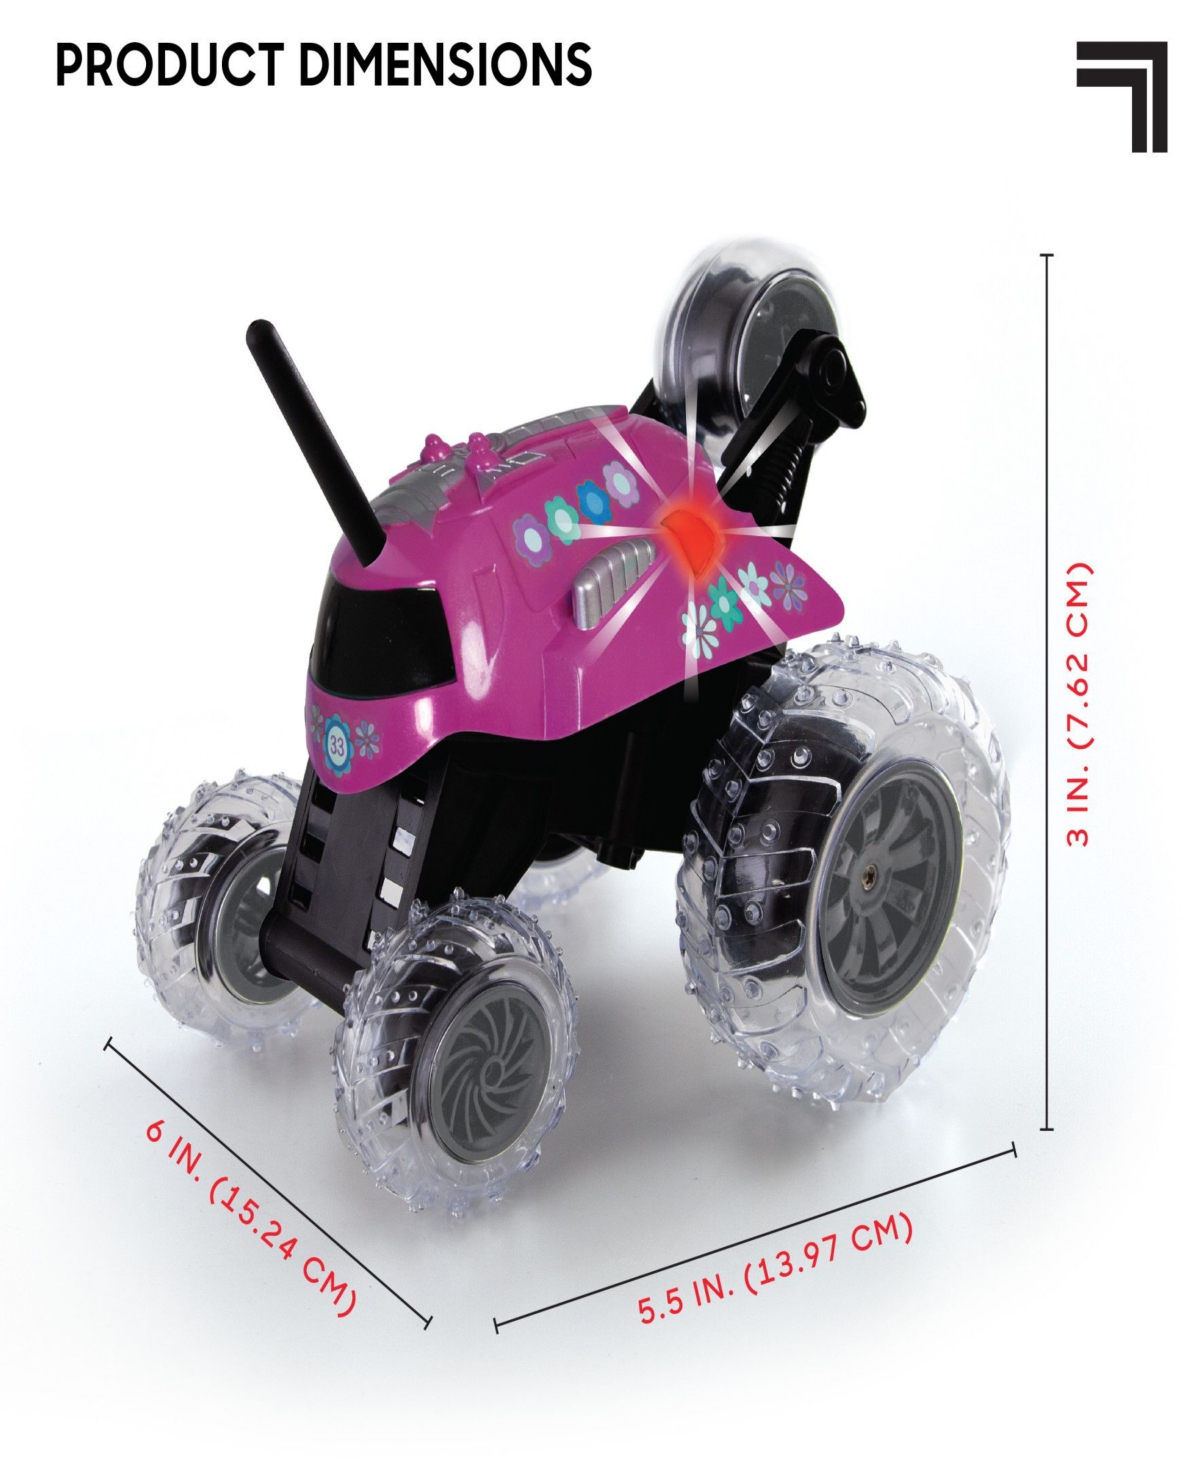 Shop Sharper Image Thunder Tumbler Toy Radio Controlled Car Set, 2 Piece In Pink